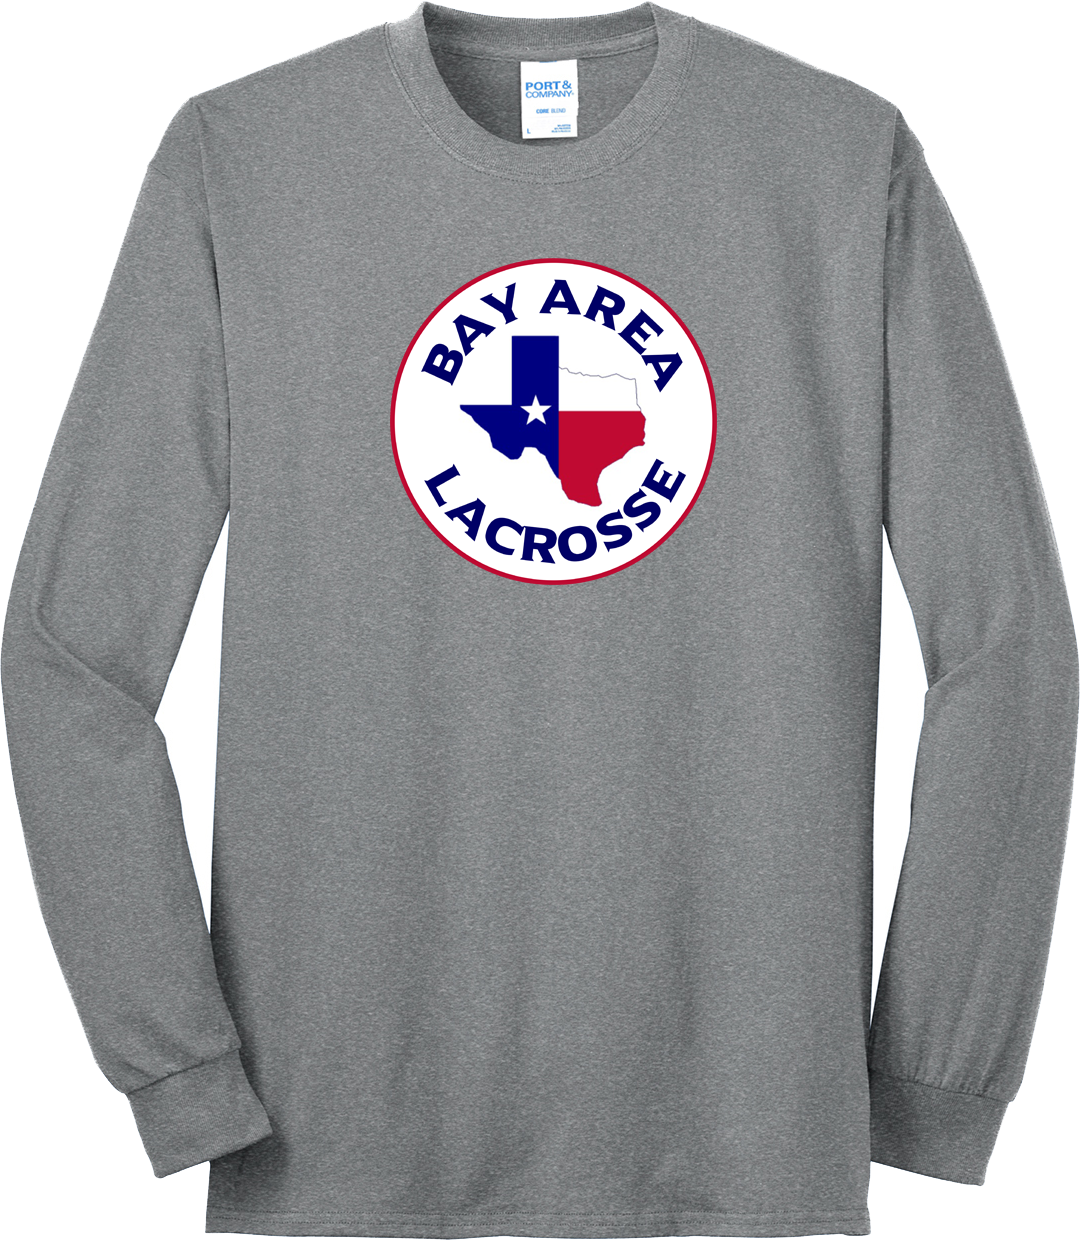 Bay Area Lacrosse Grey Long Sleeve T-Shirt